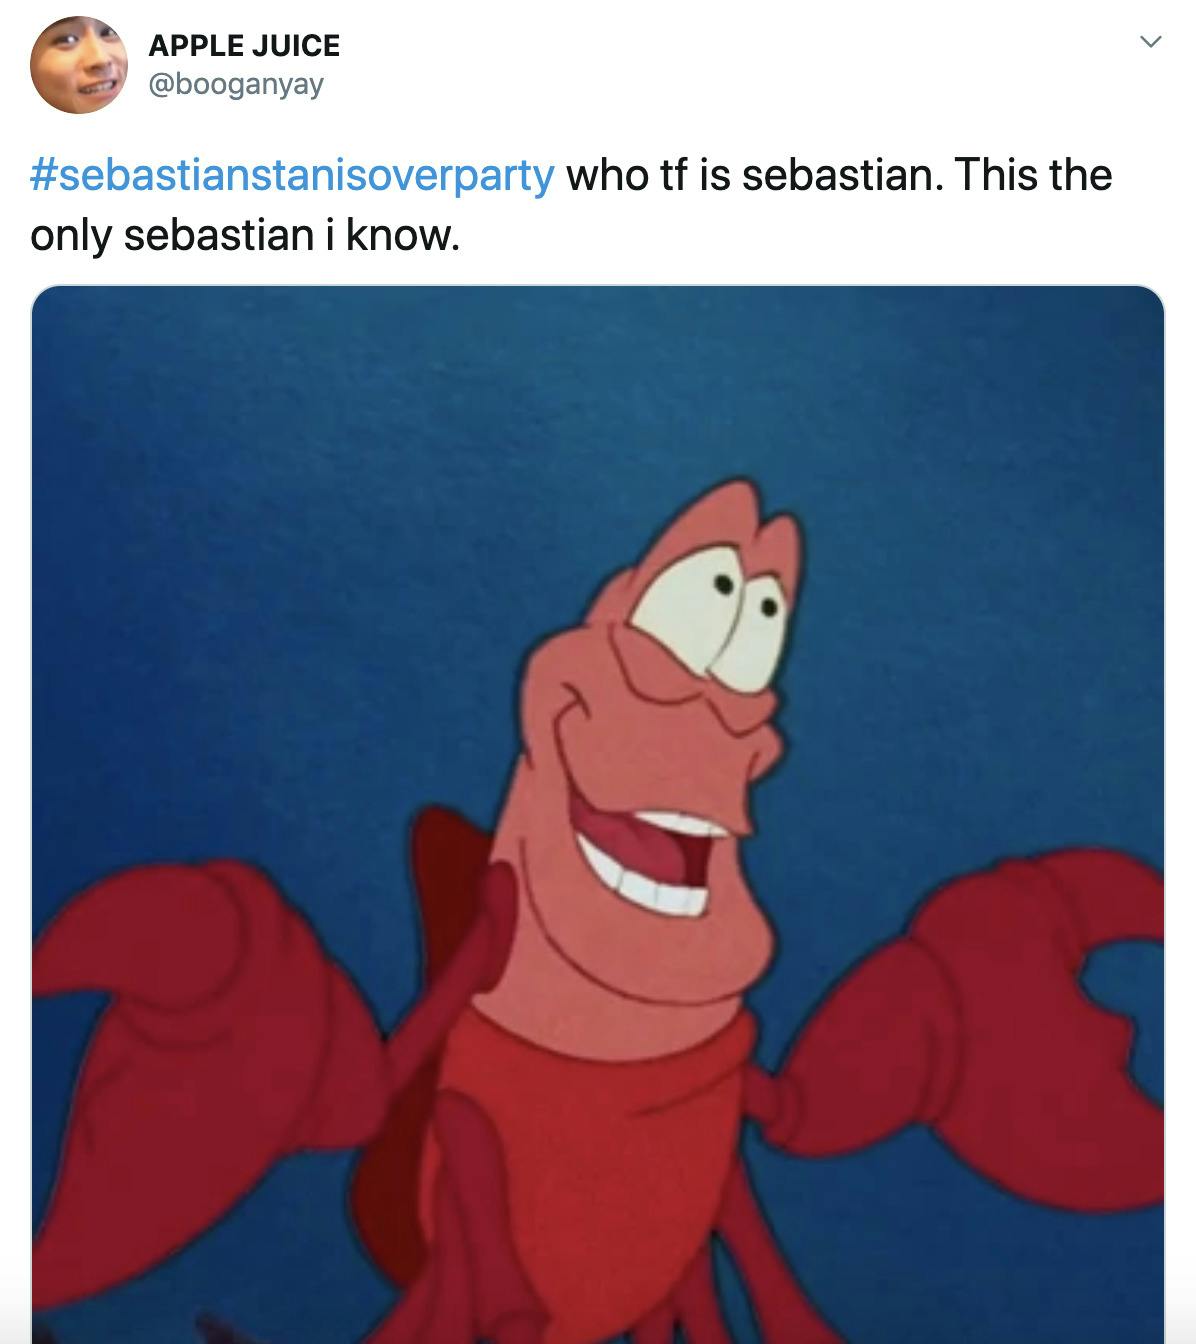 "#sebastianstanisoverparty who tf is sebastian. This the only sebastian i know." image os Sebastian from The Little Mermaid